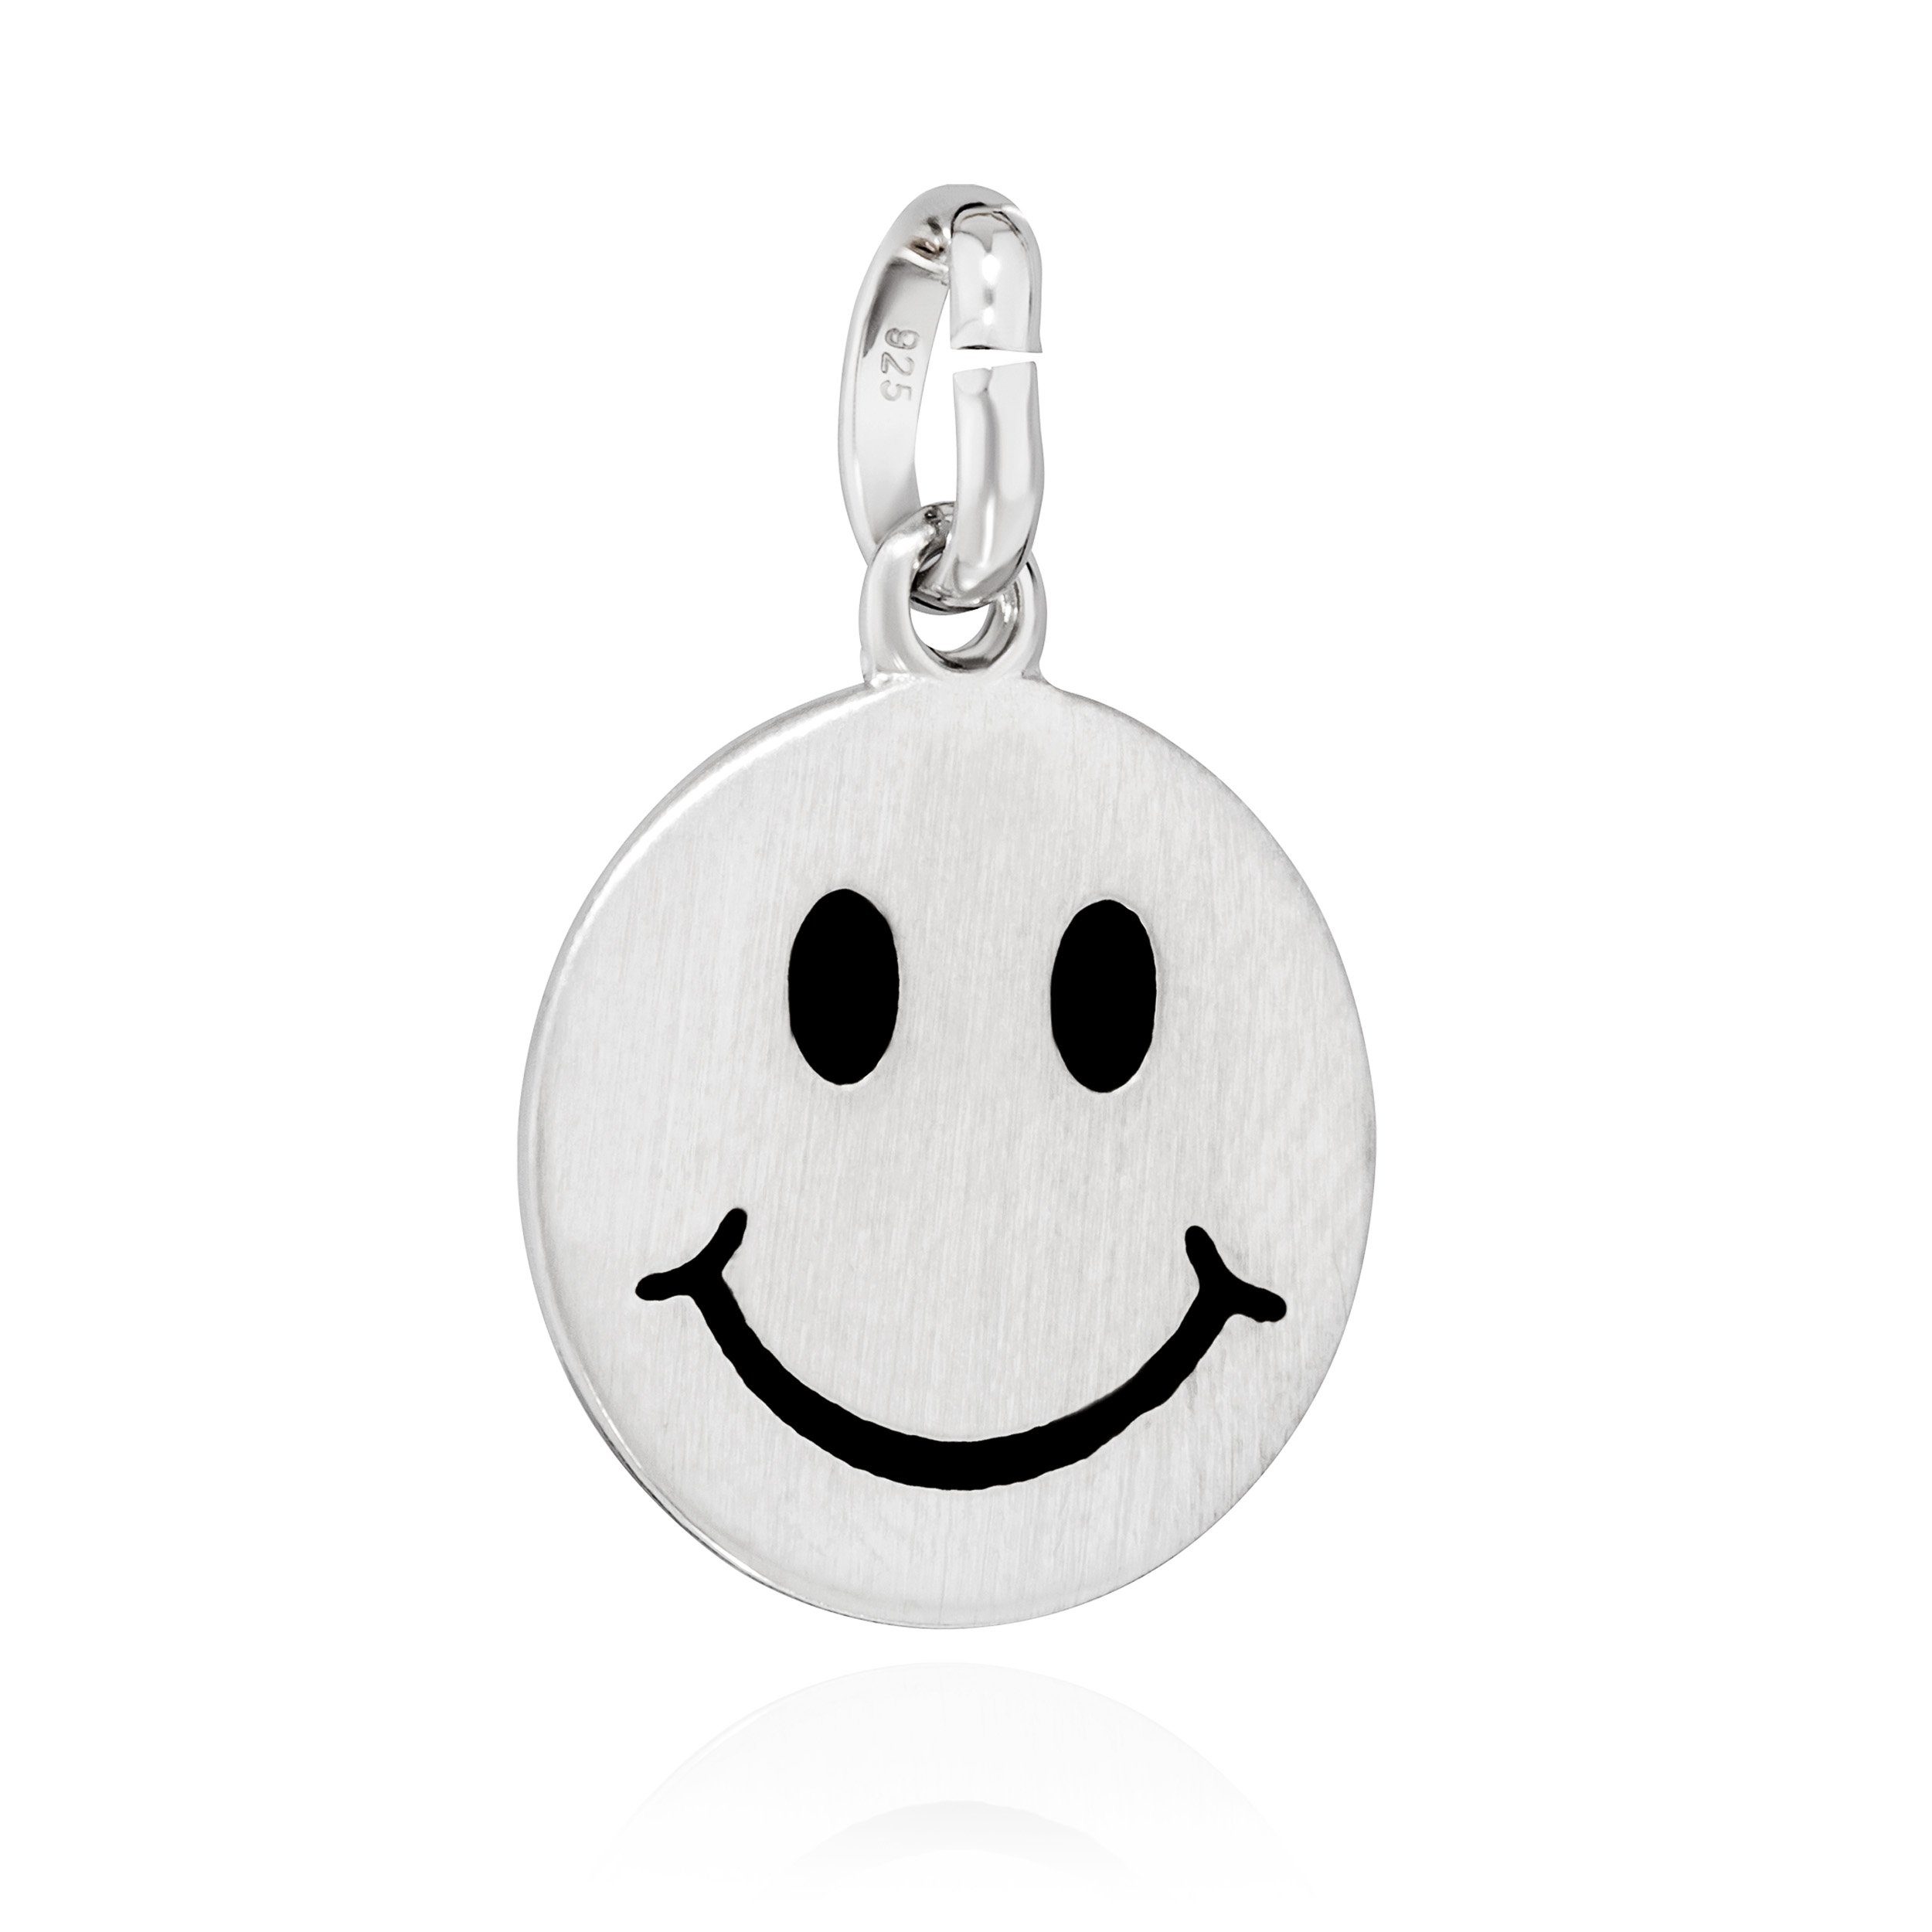 Tal matt NKlaus Silber 12mm 925 lackiert Kettenahänger schwarz Kettenanhänger Amulett Smiley